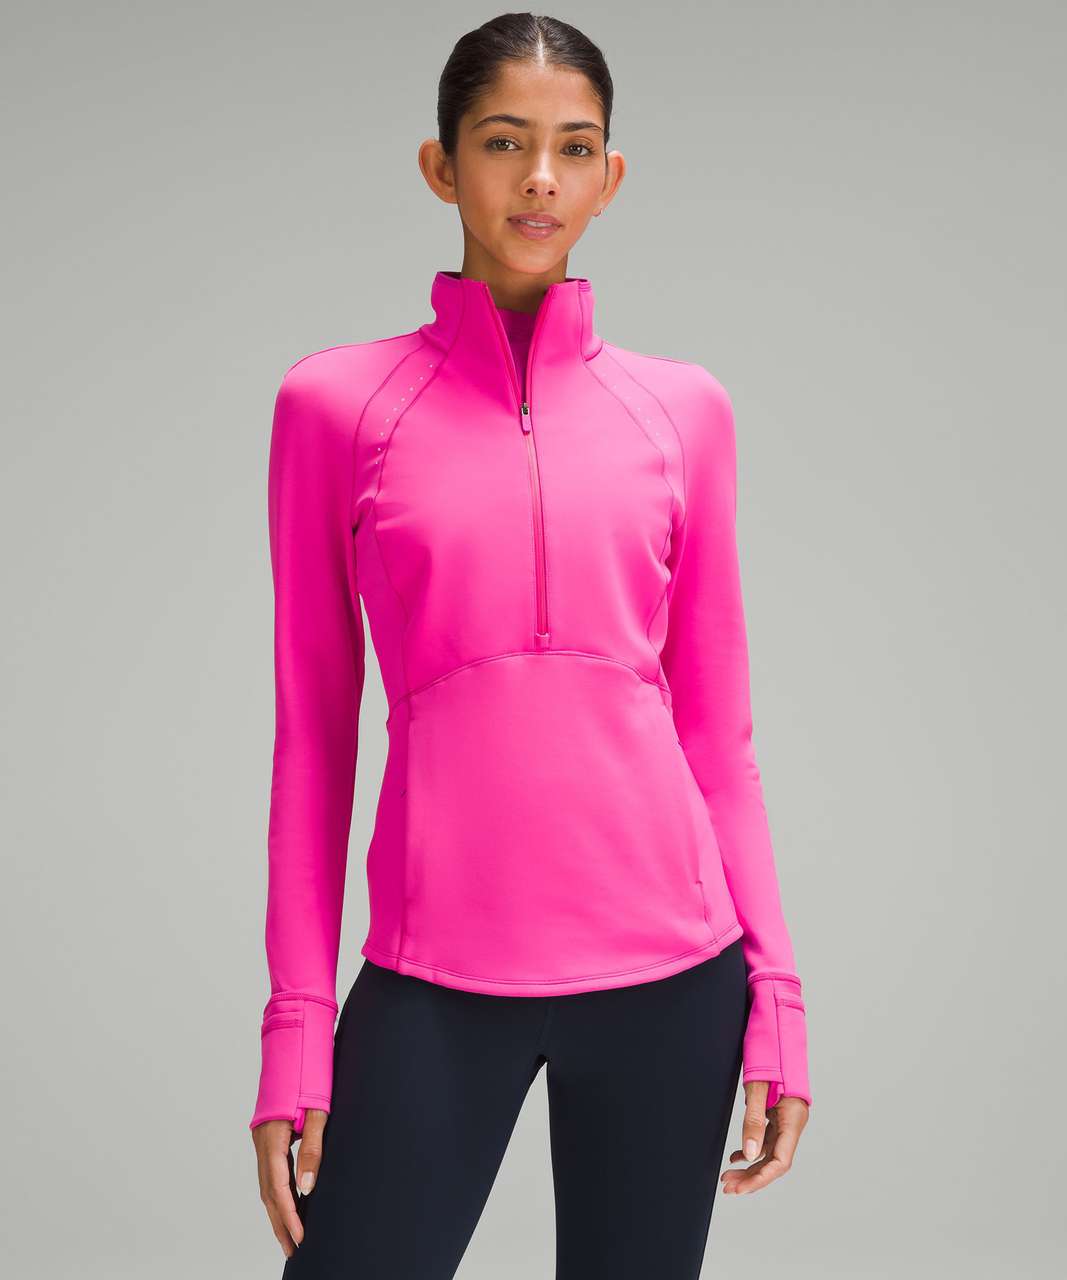 Athletic Attic - Lululemon hot pink full zip in stride jacket, size 2, $48